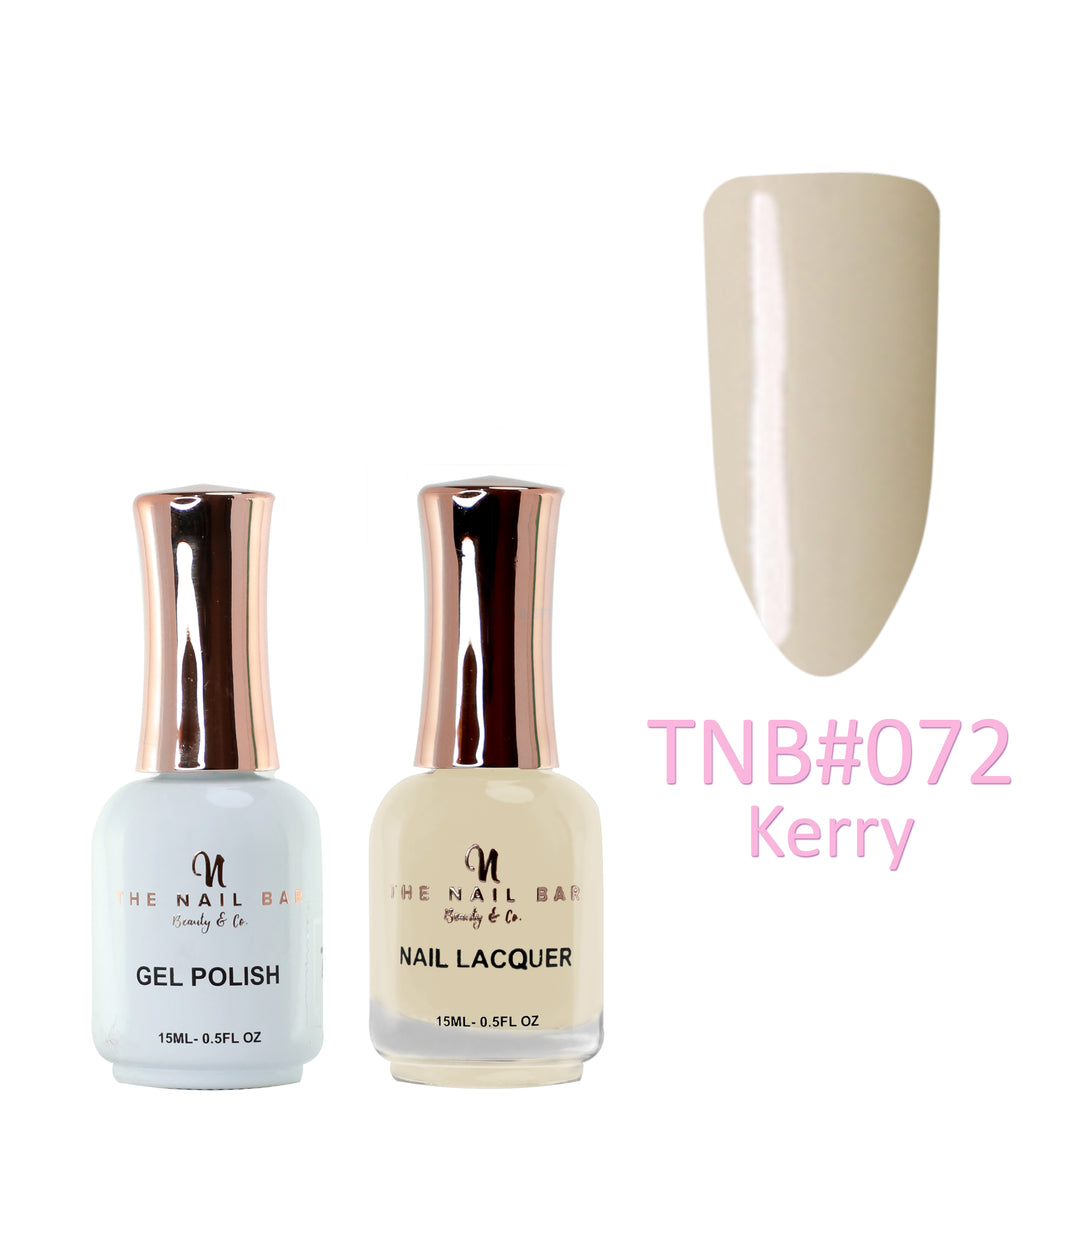 Dual Polish/Gel colour matching (15ml) - Kerry - The Nail Bar Beauty & Co.